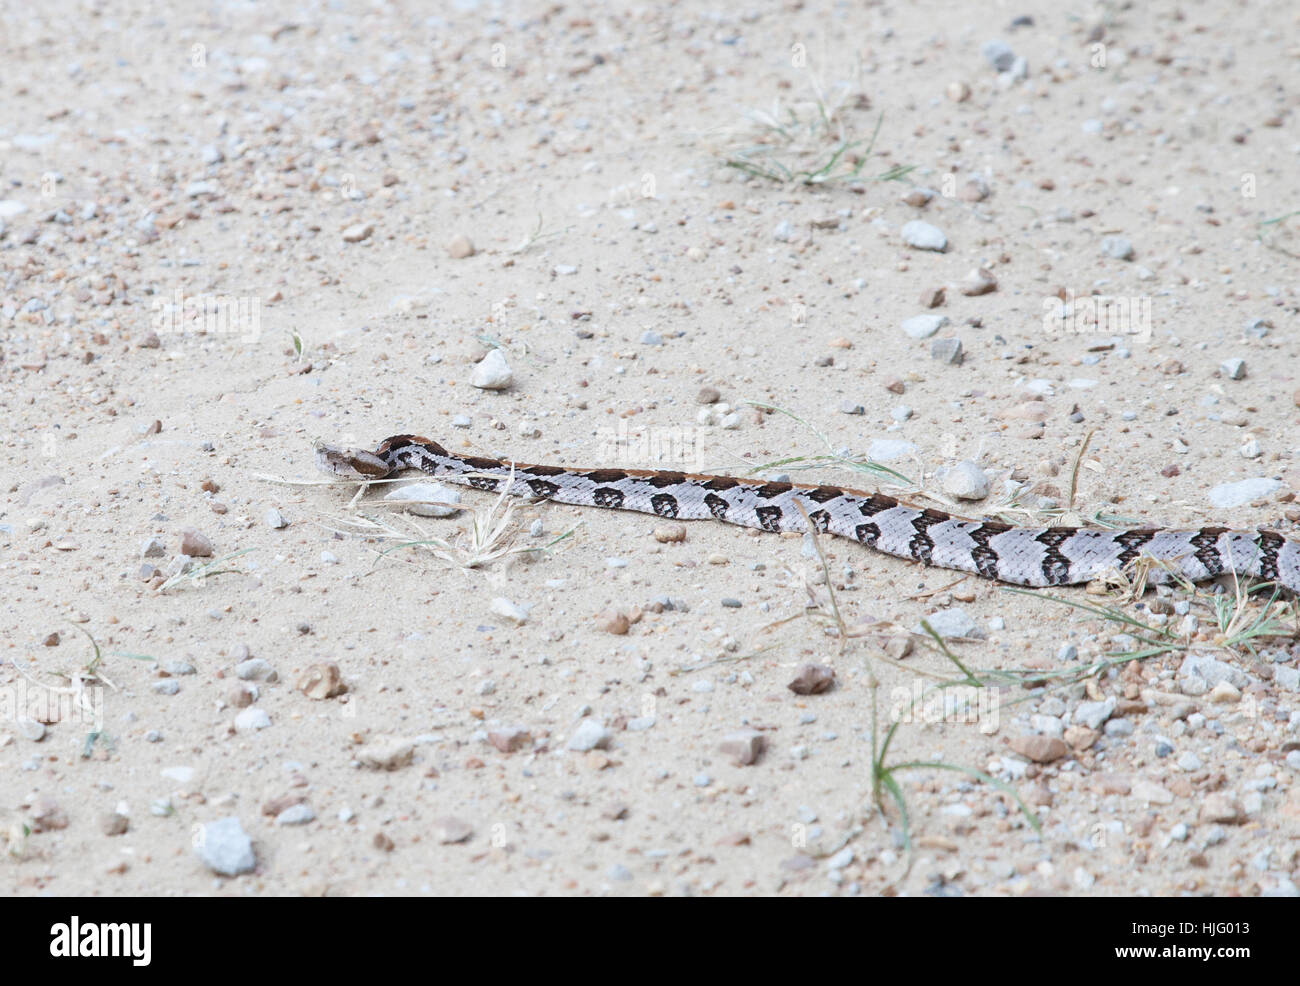 Small canebrake rattlesnake slithering across a dirt road Stock Photo